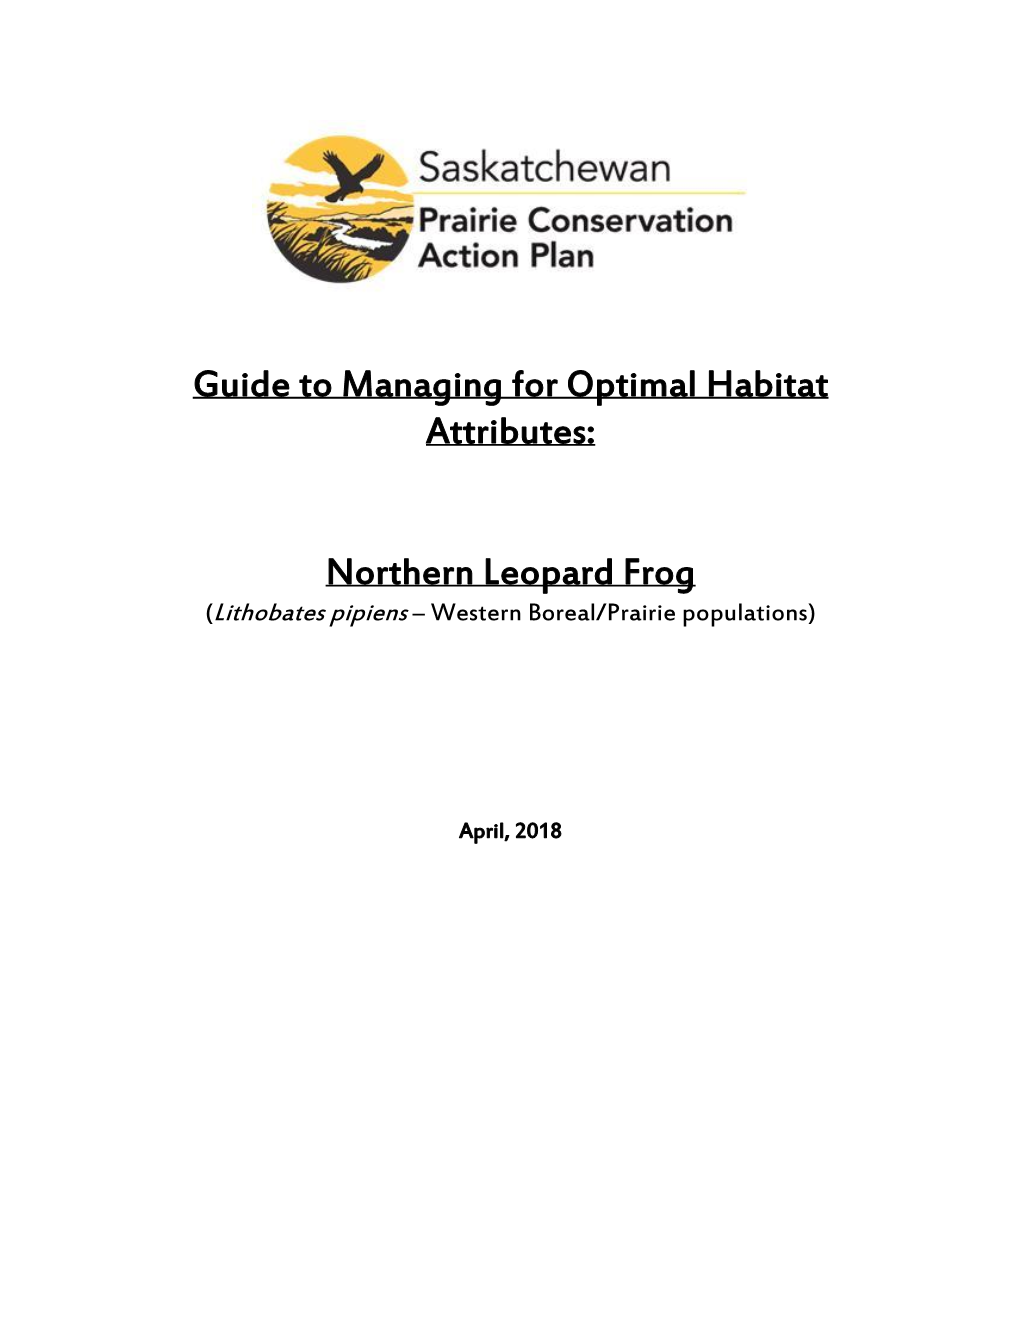 Northern Leopard Frog (Lithobates Pipiens – Western Boreal/Prairie Populations)